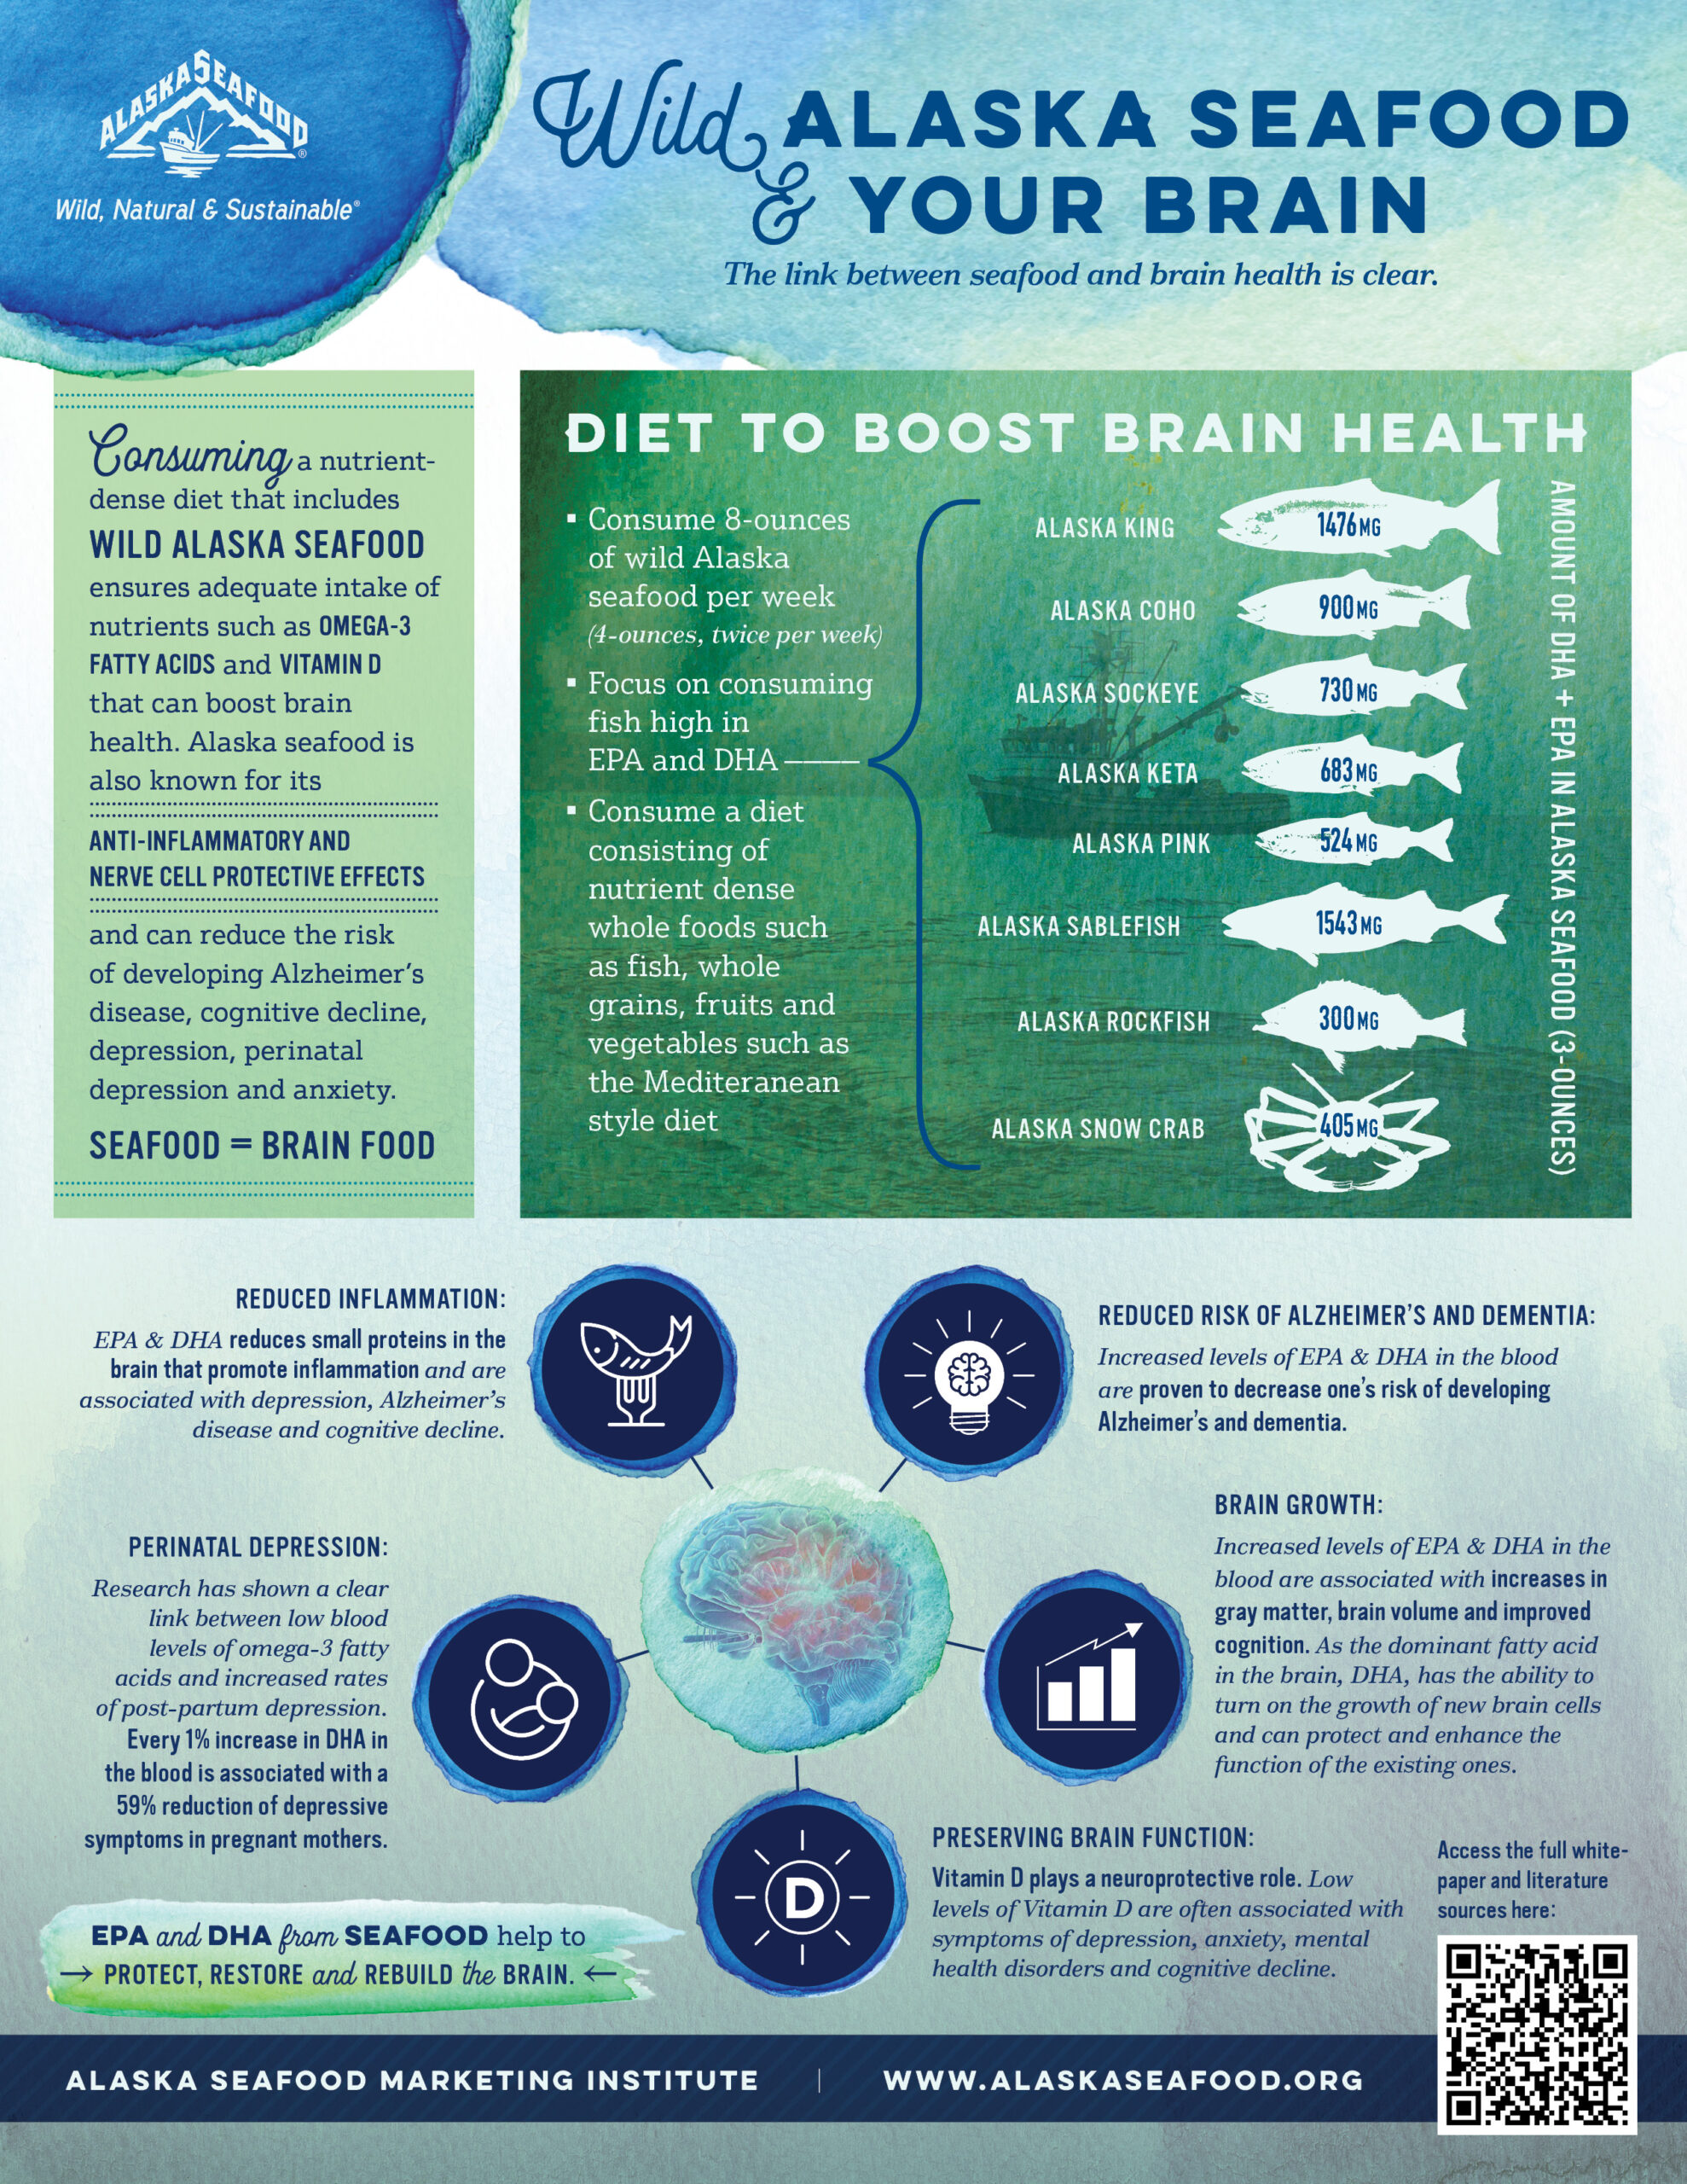 Brain Health and Alaskan Seafood